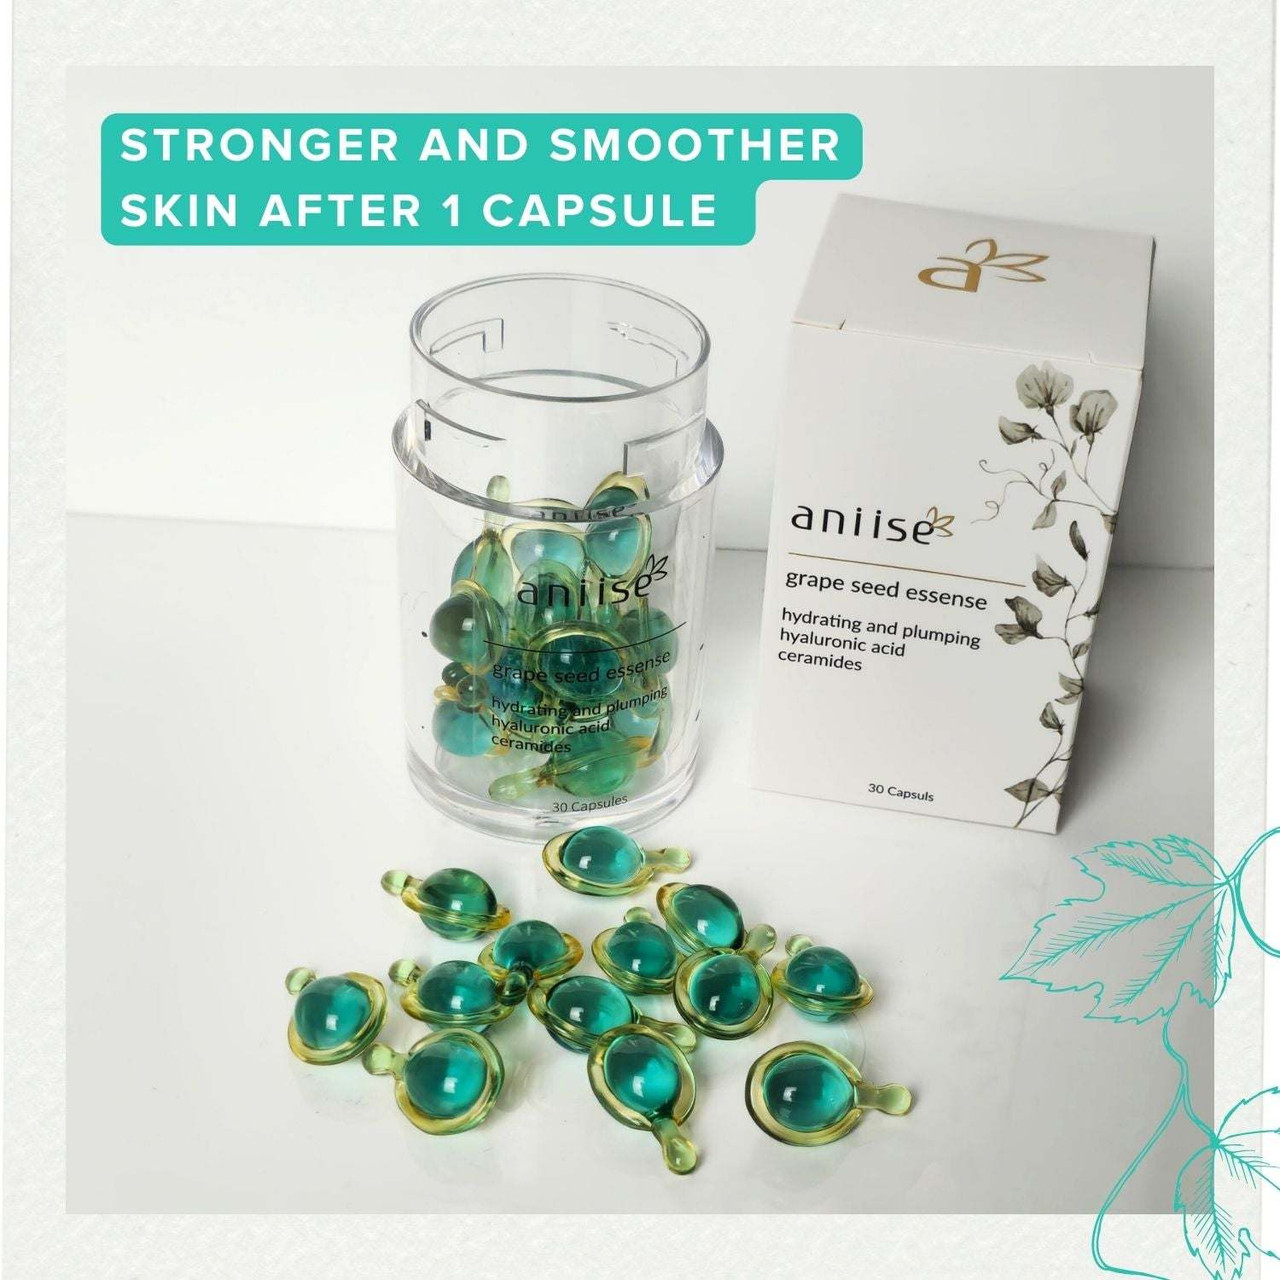 Aniise Grape Seed Essence - 30 capsules